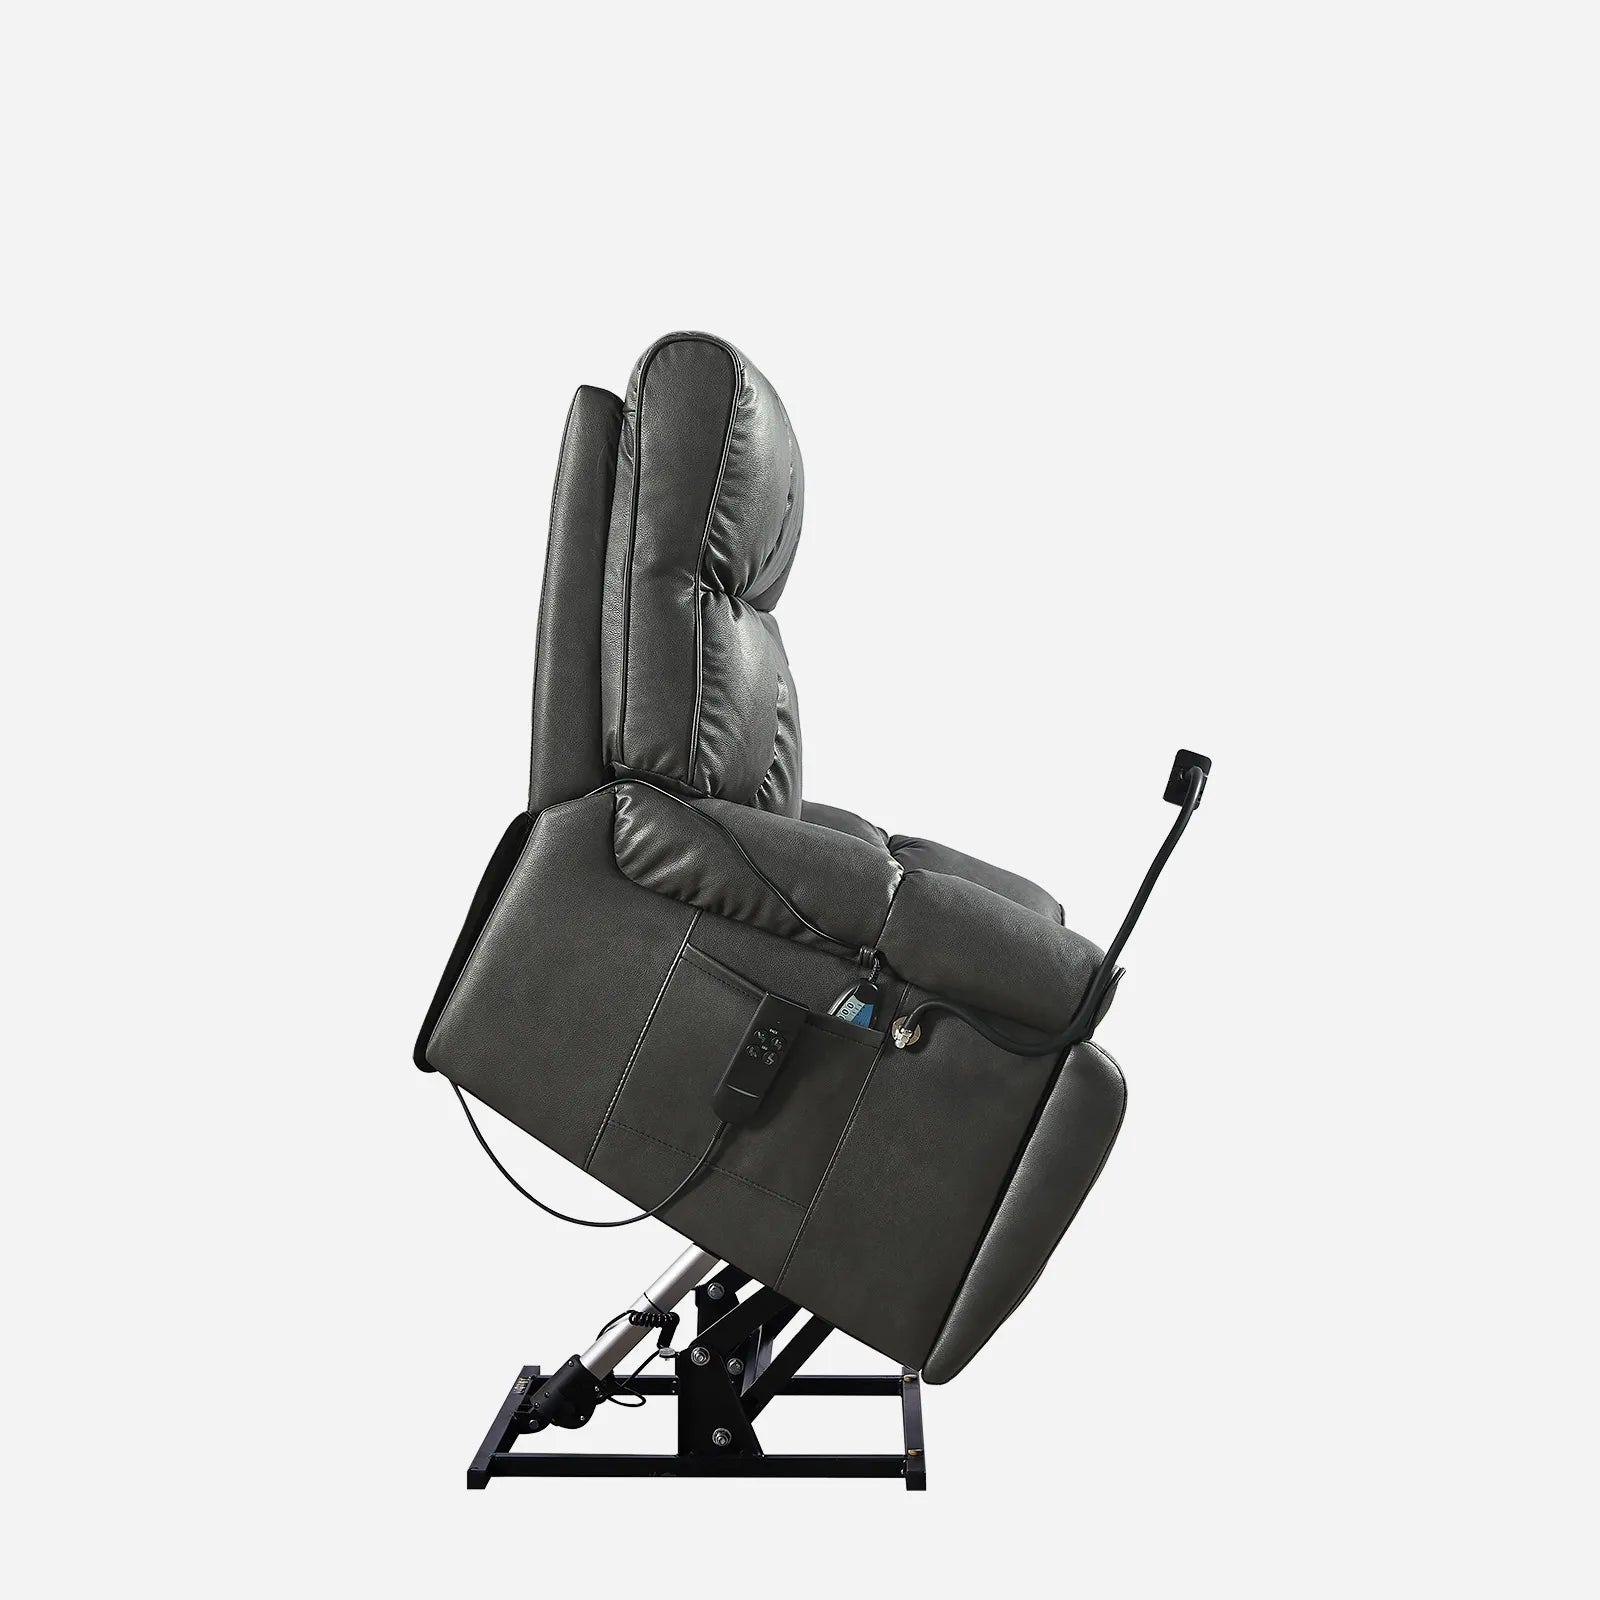 black lift recliner chair for the elderly